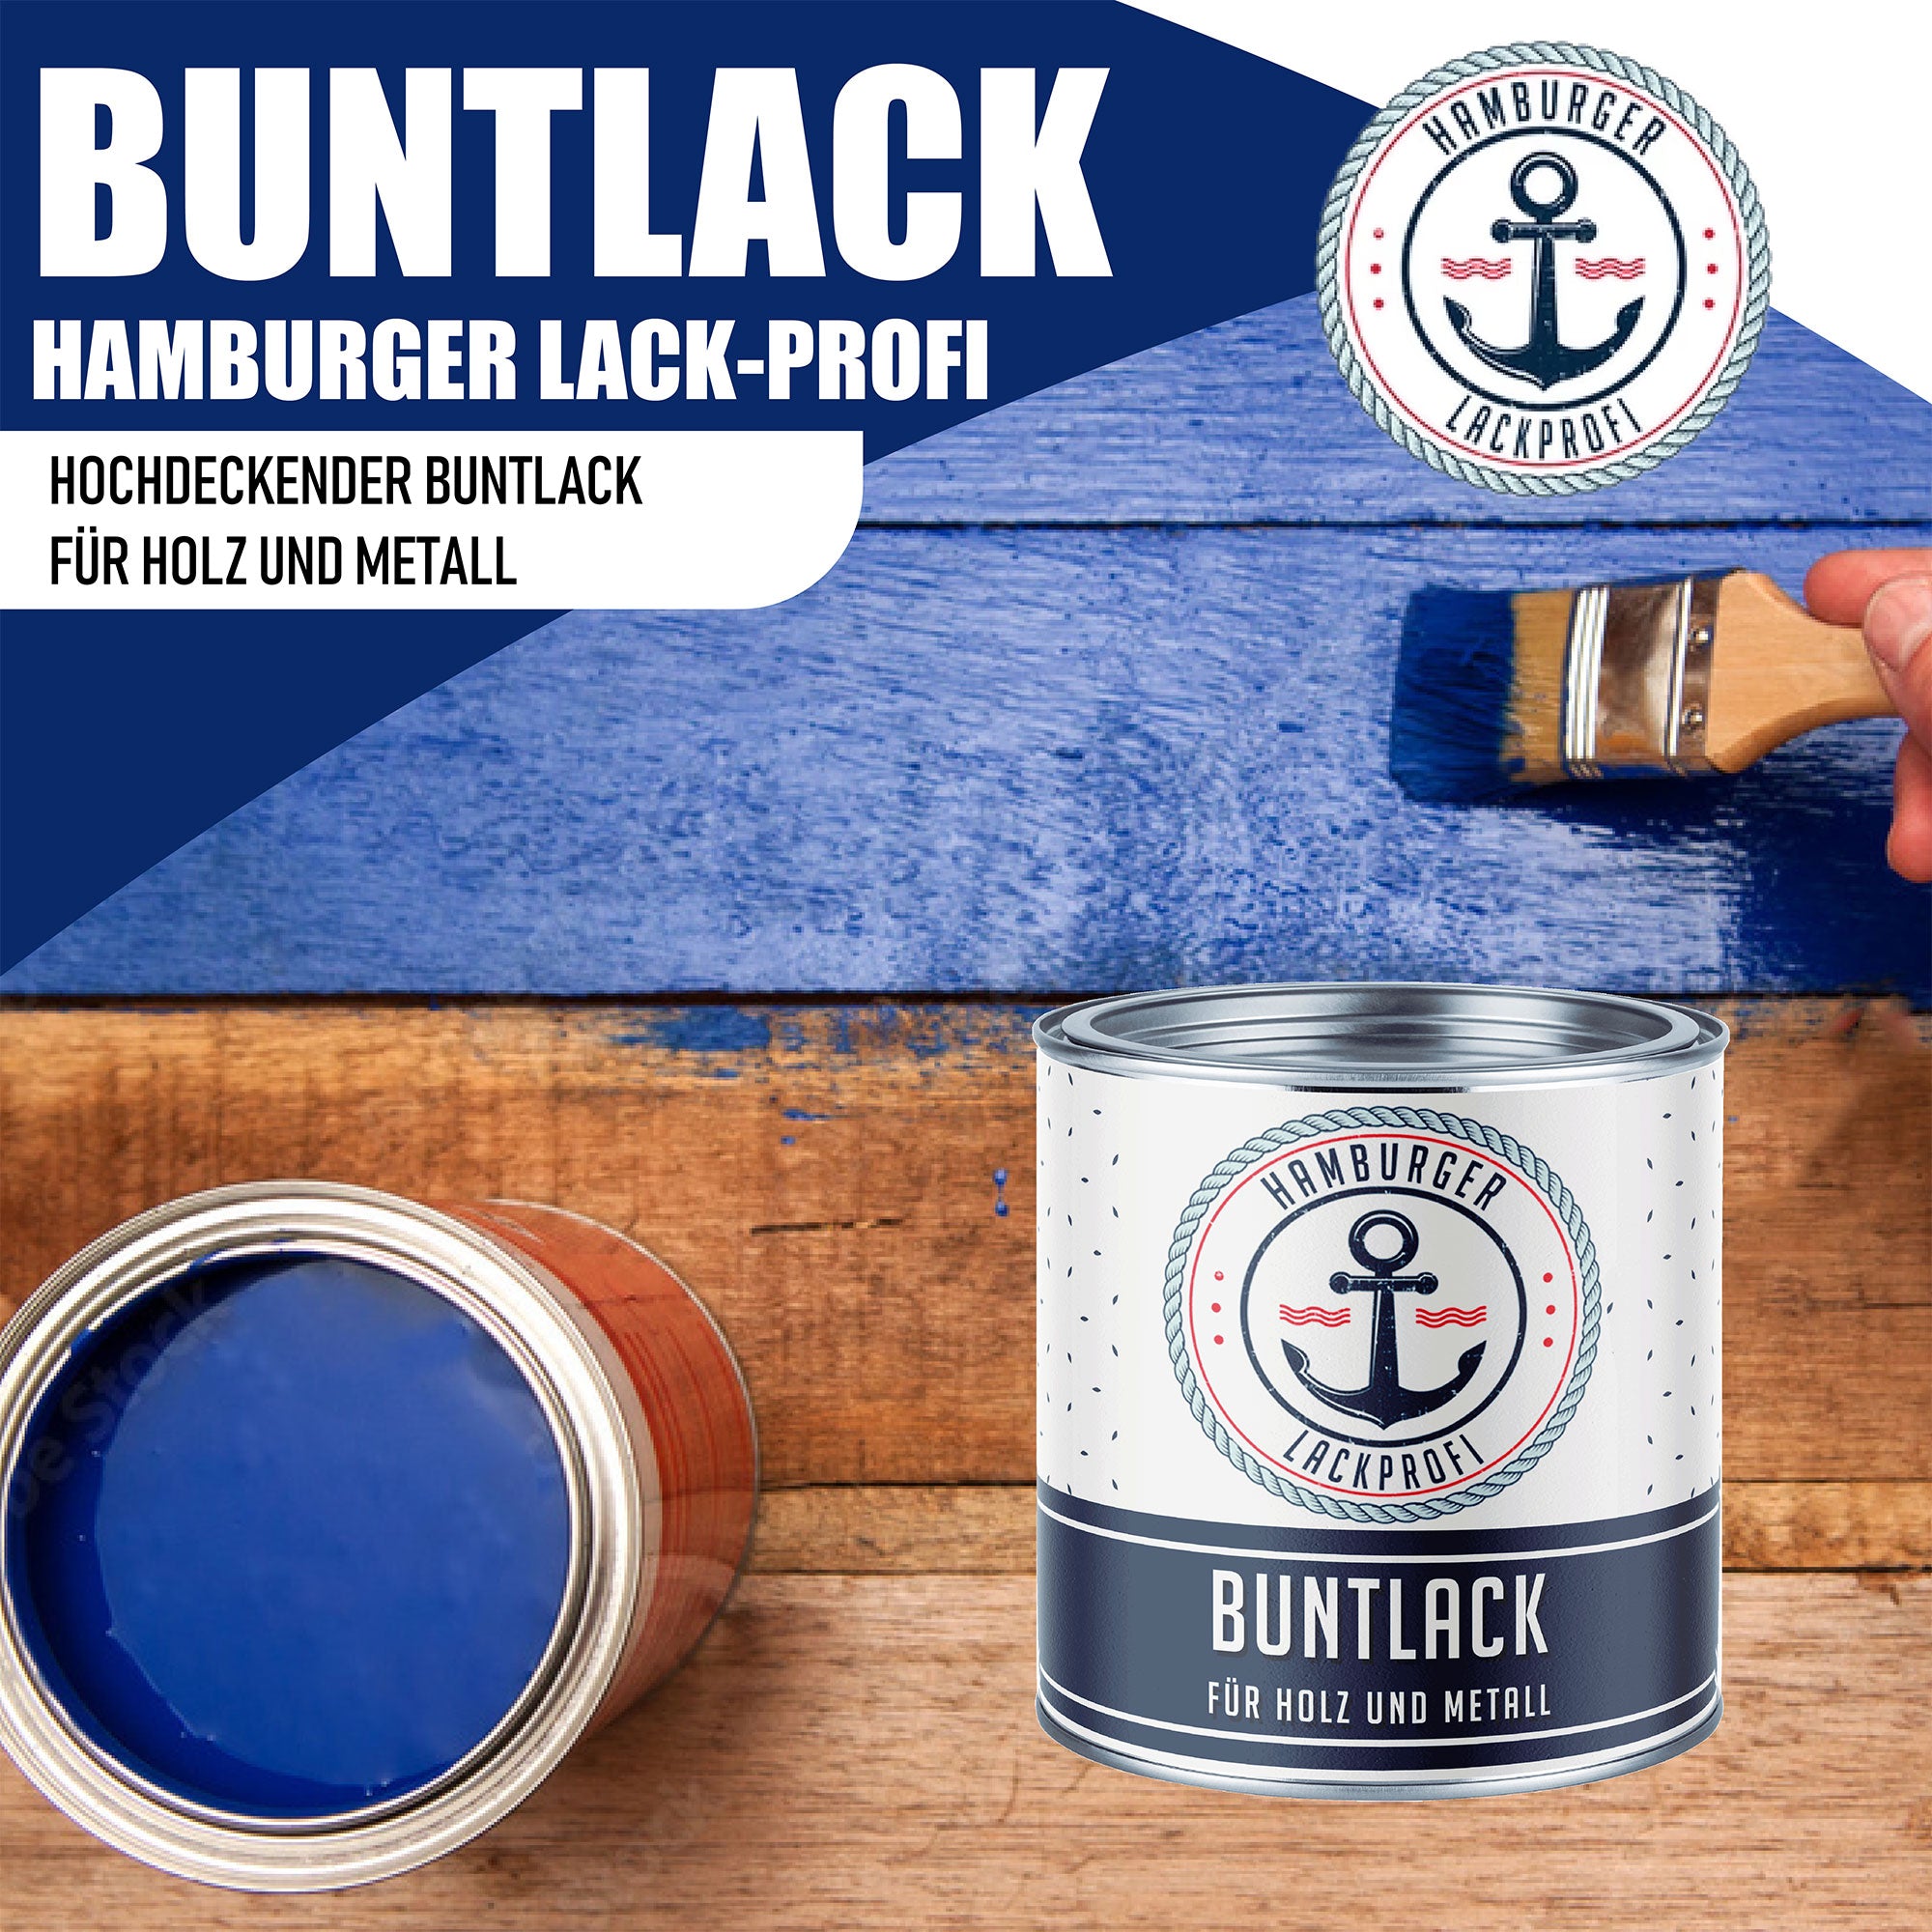 Hamburger Lack-Profi Buntlack in Eisengrau RAL 7011 mit Lackierset (X300) & Verdünnung (1 L) - 30% Sparangebot